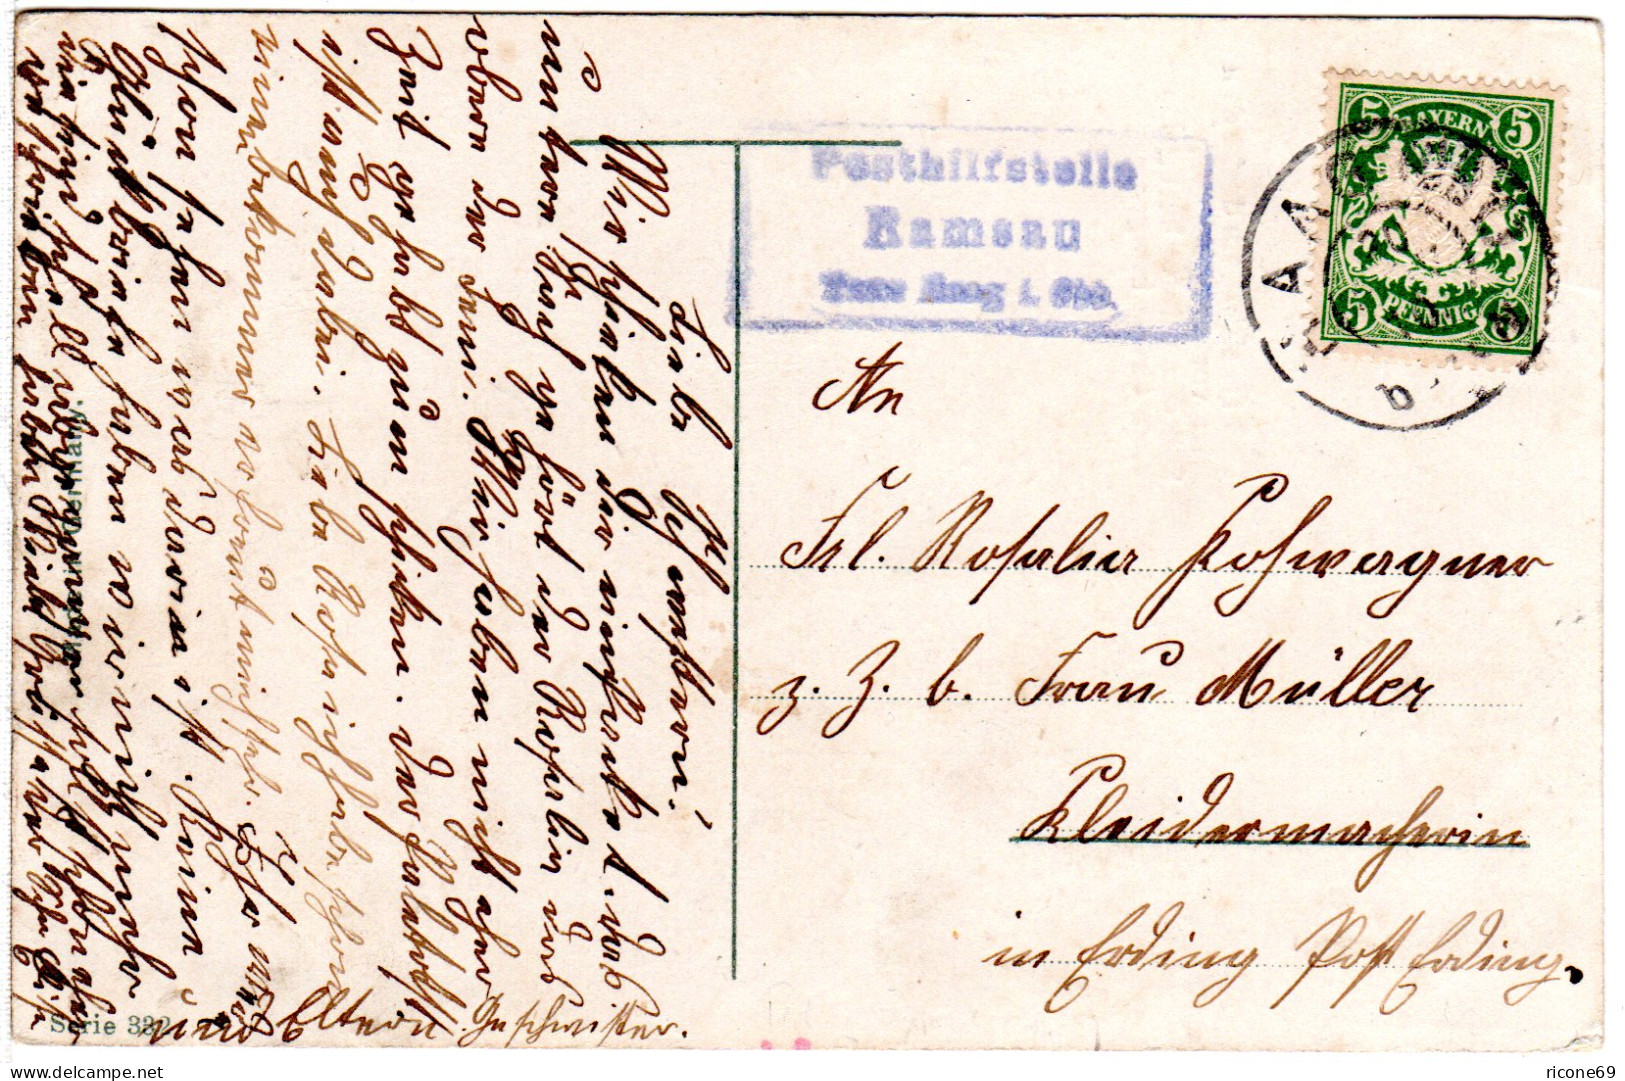 Bayern 1910, Posthilfstelle RAMSAU Taxe Haag I. Obb. Auf Karte M. 5 Pf. - Briefe U. Dokumente